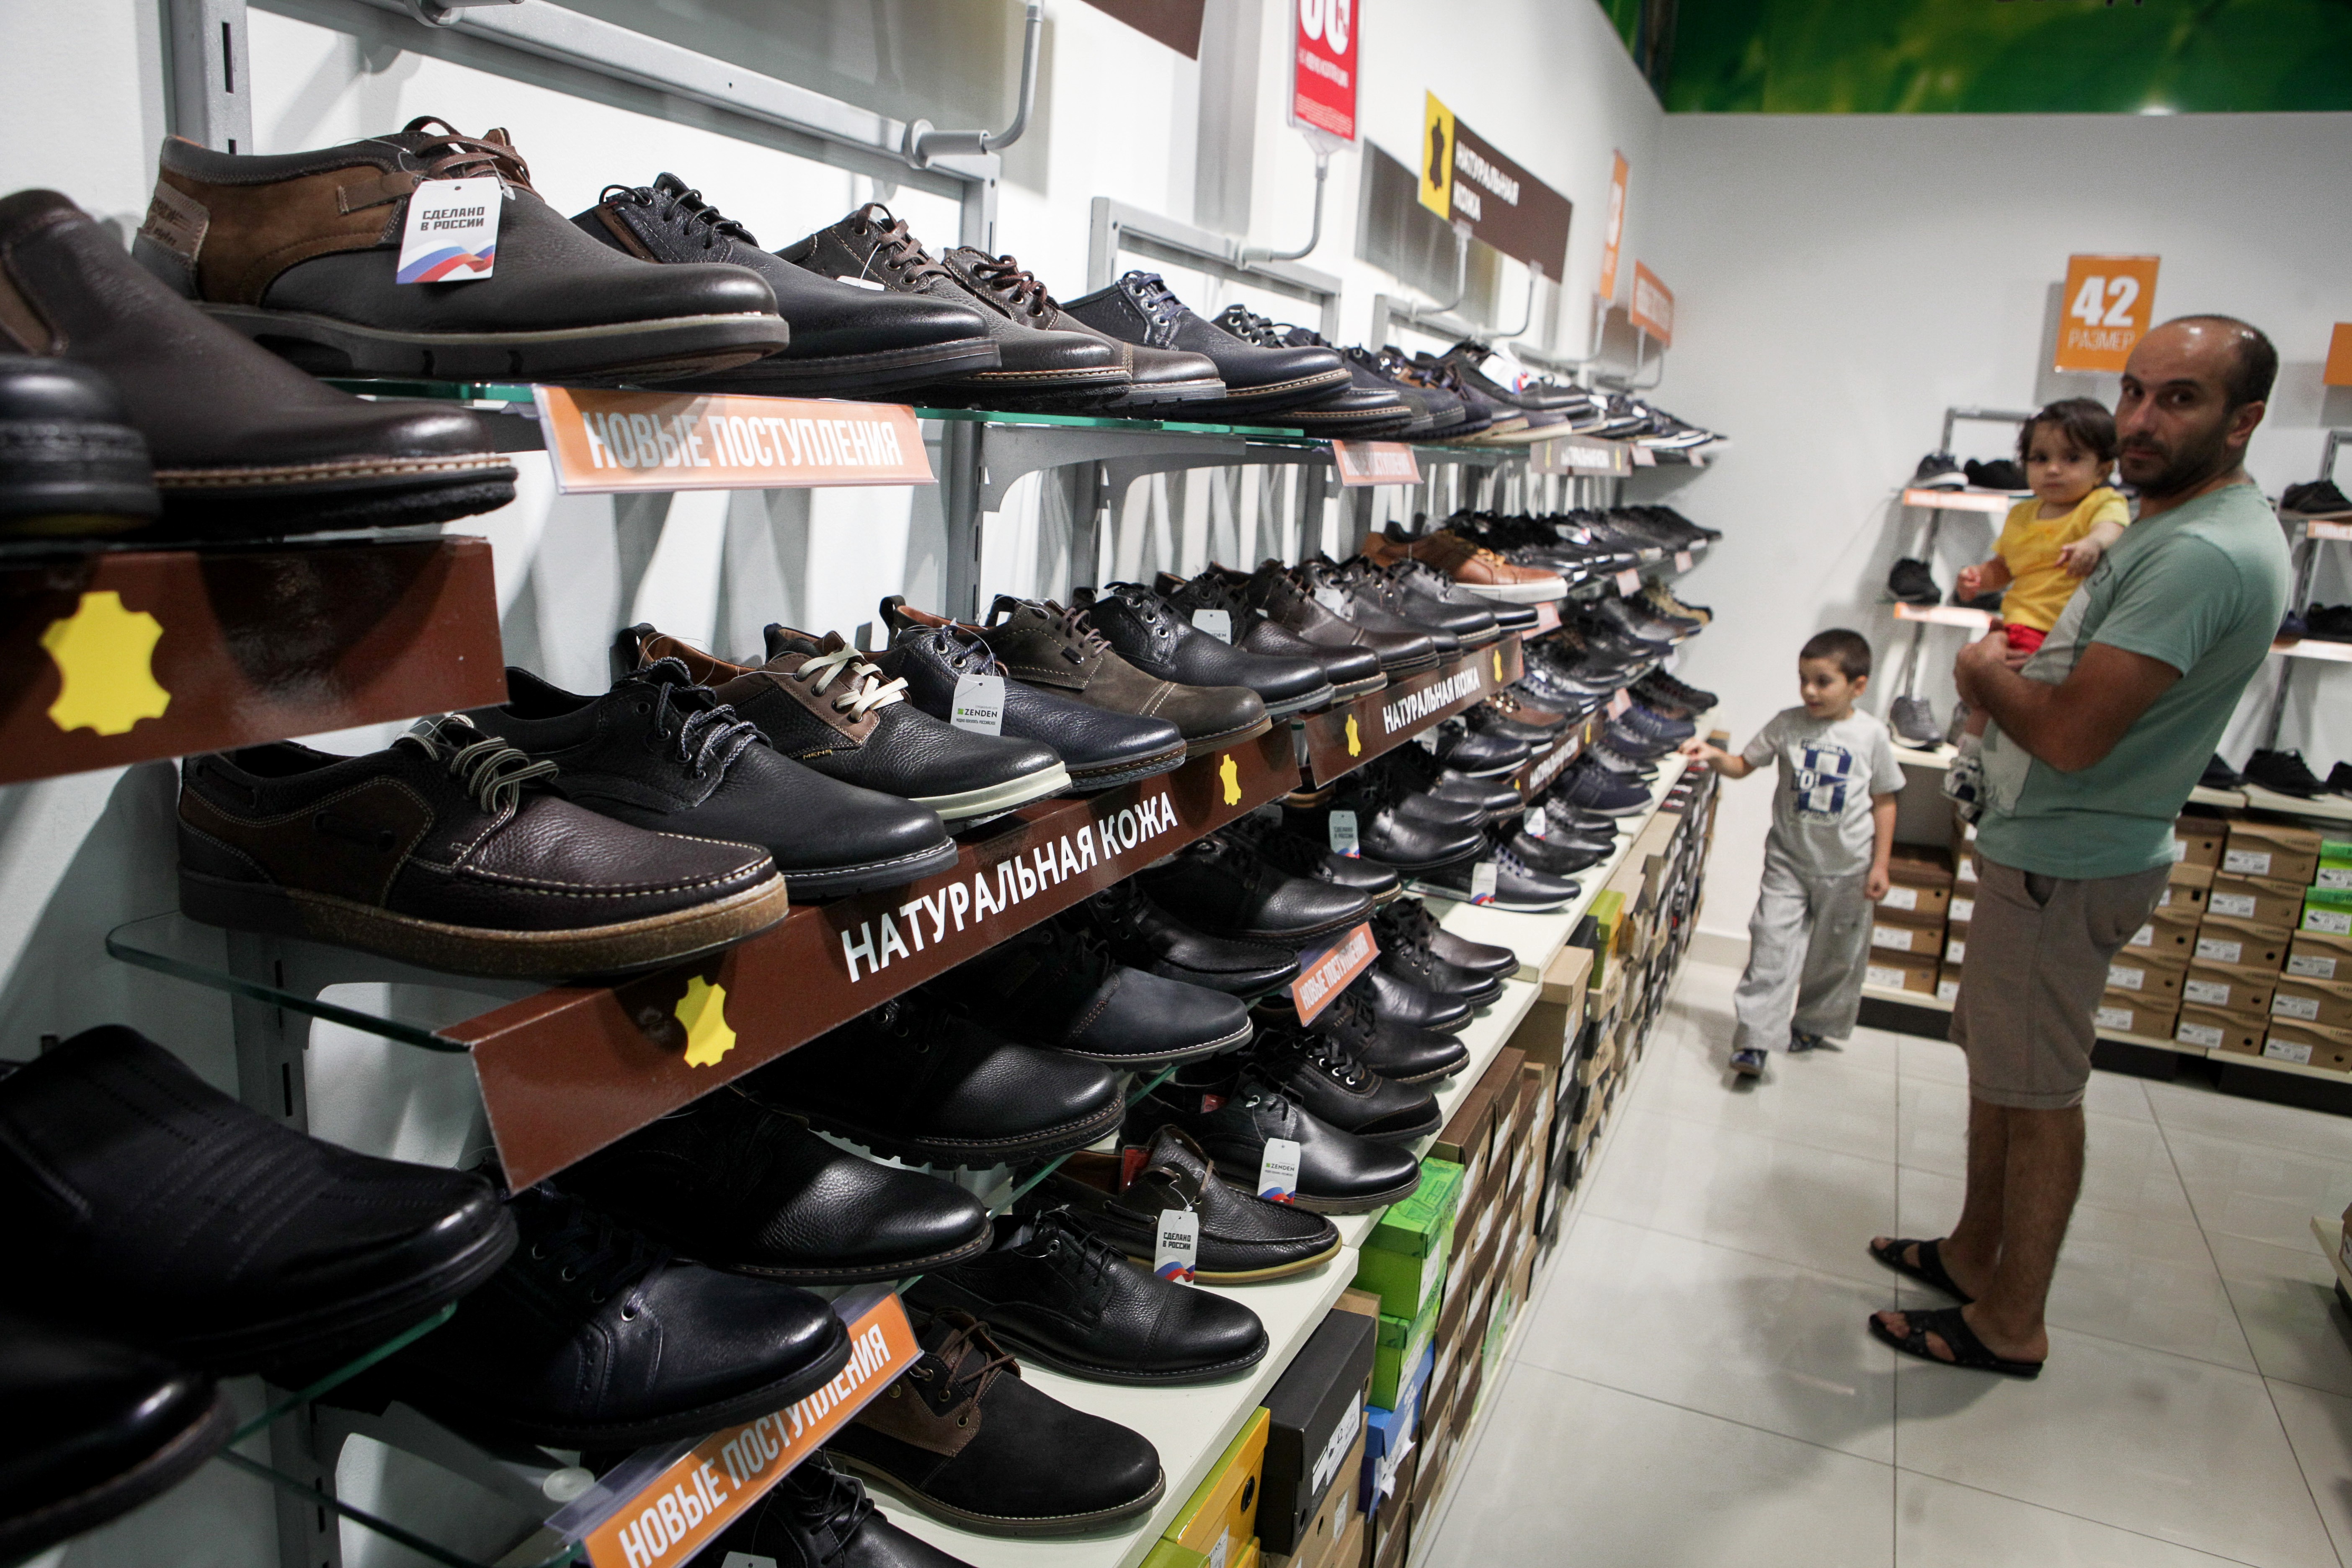 Универмаг обуви. Магазин мужской обуви. Рынок обуви. Рынок мужской обуви. Обувные товары.